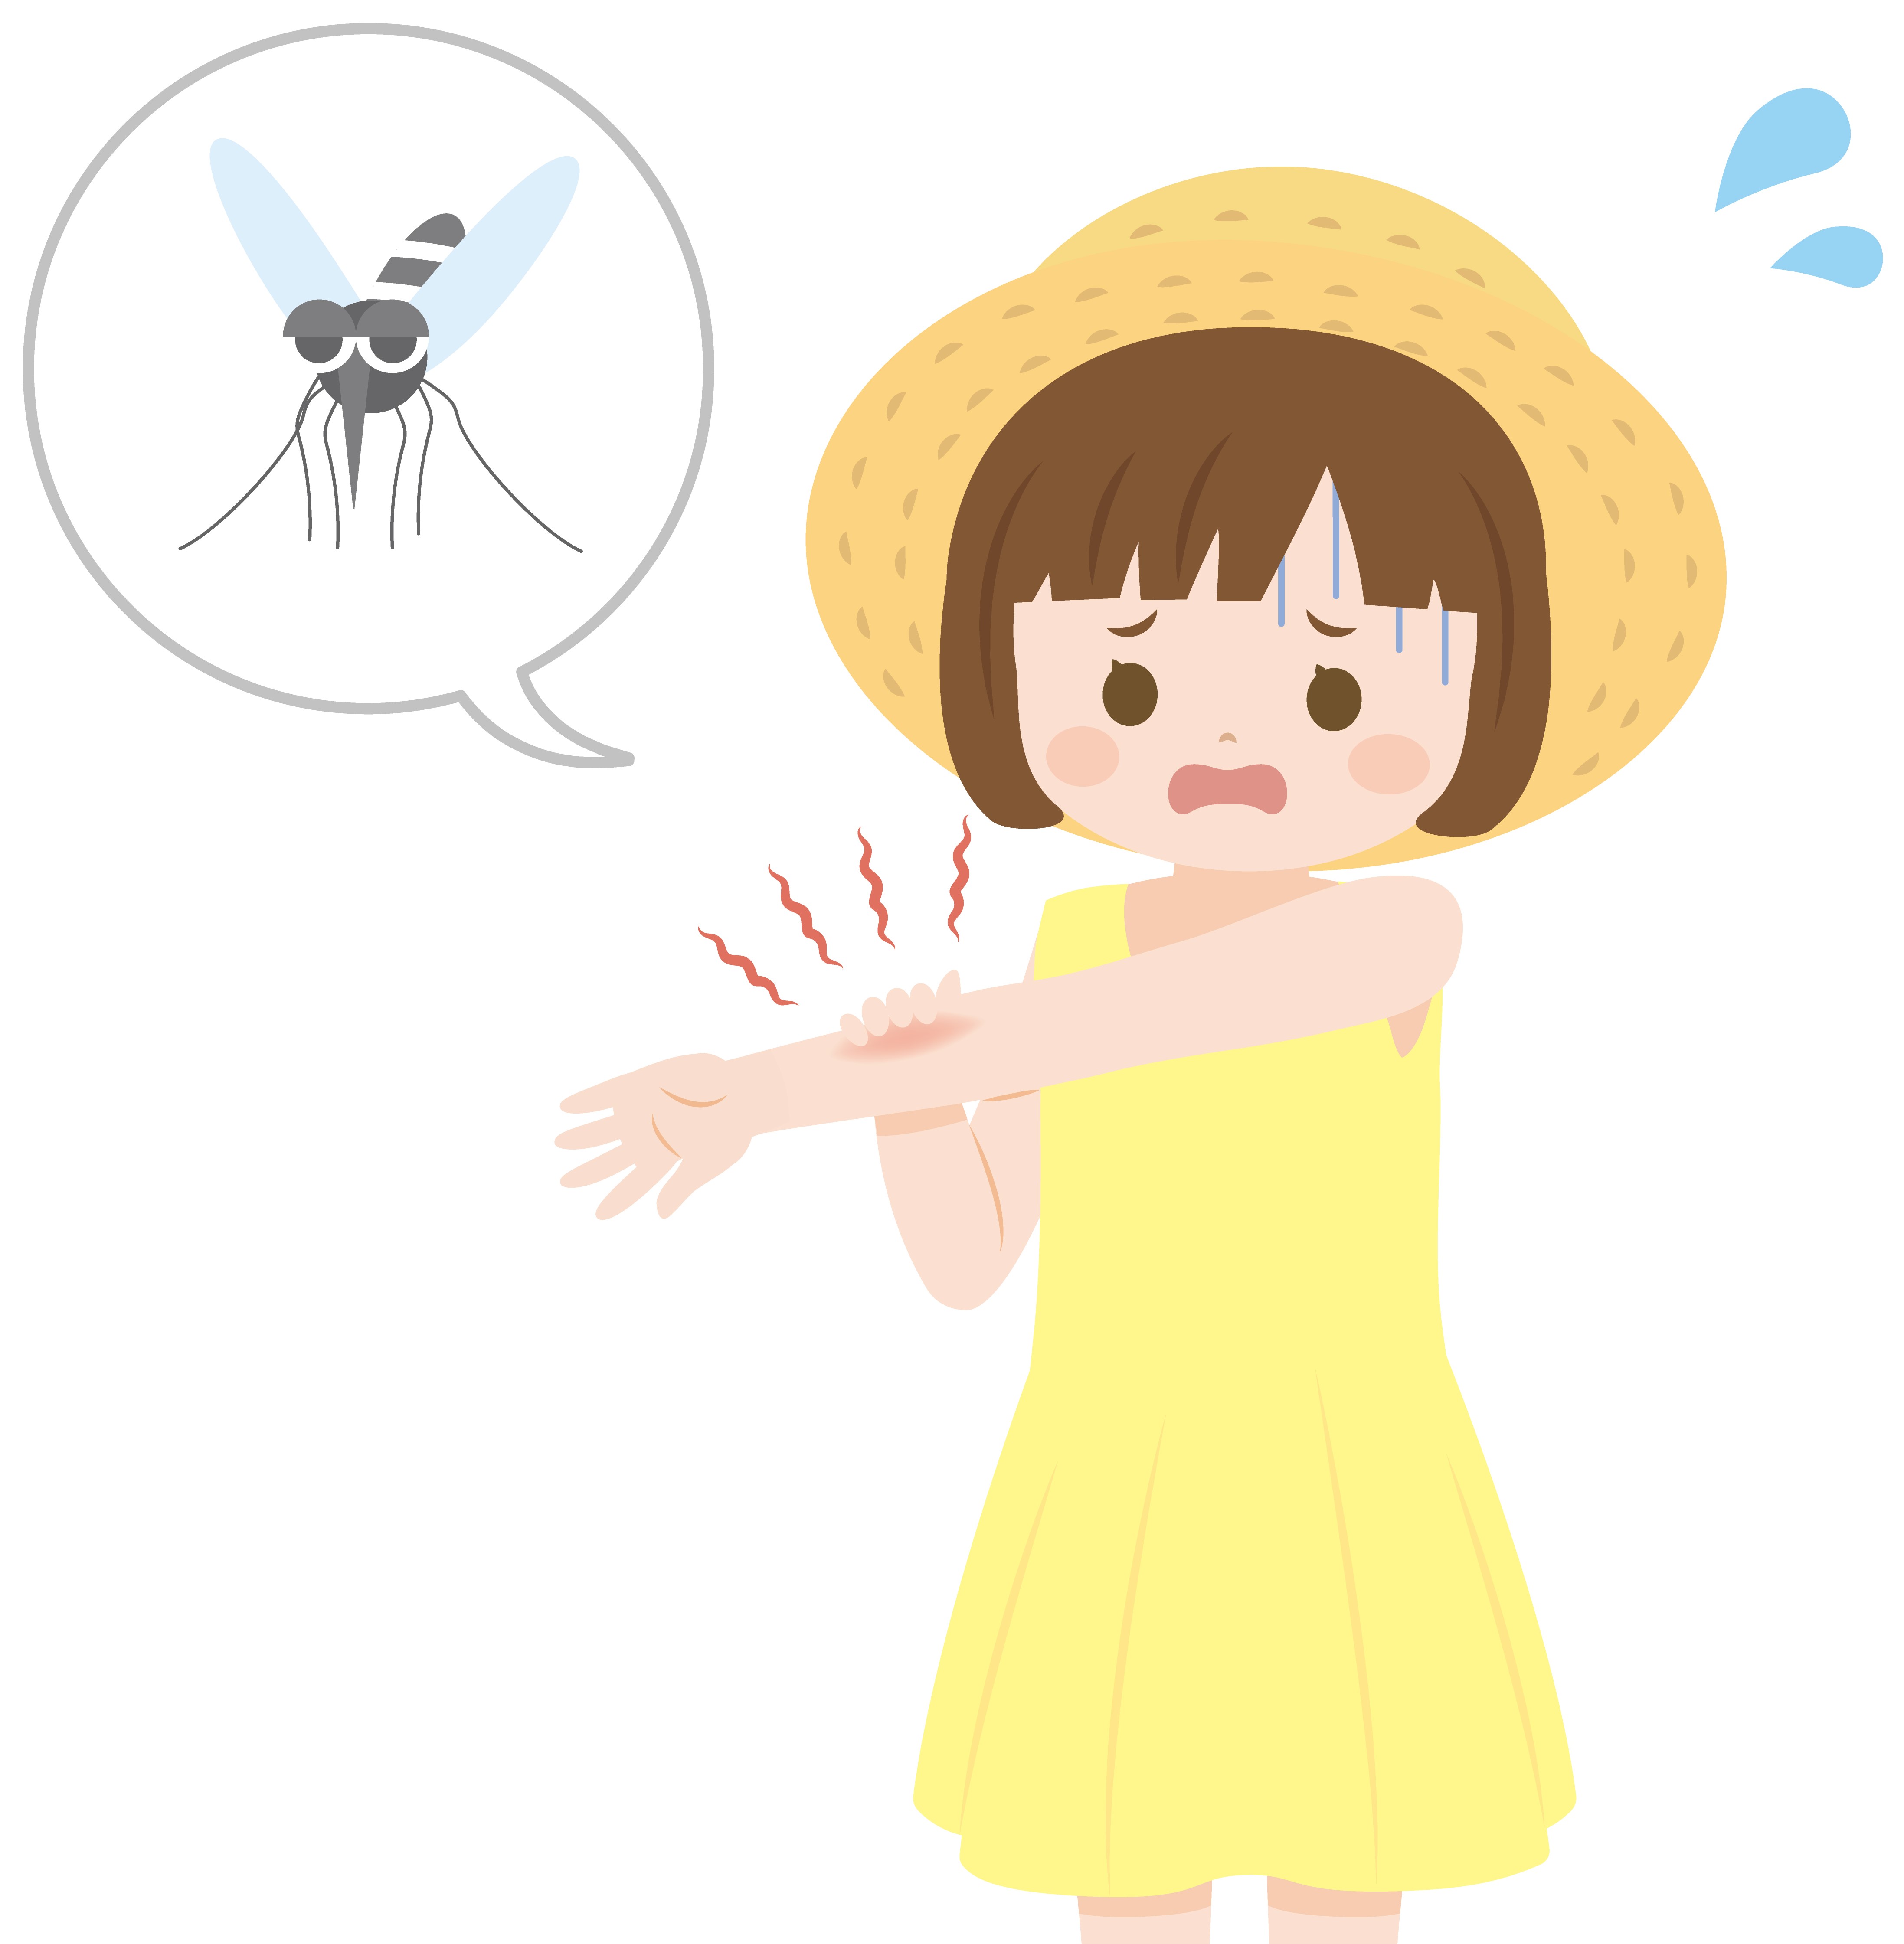 Insect Bites & Stings Treatment - AIPC Tel: 6694 1661